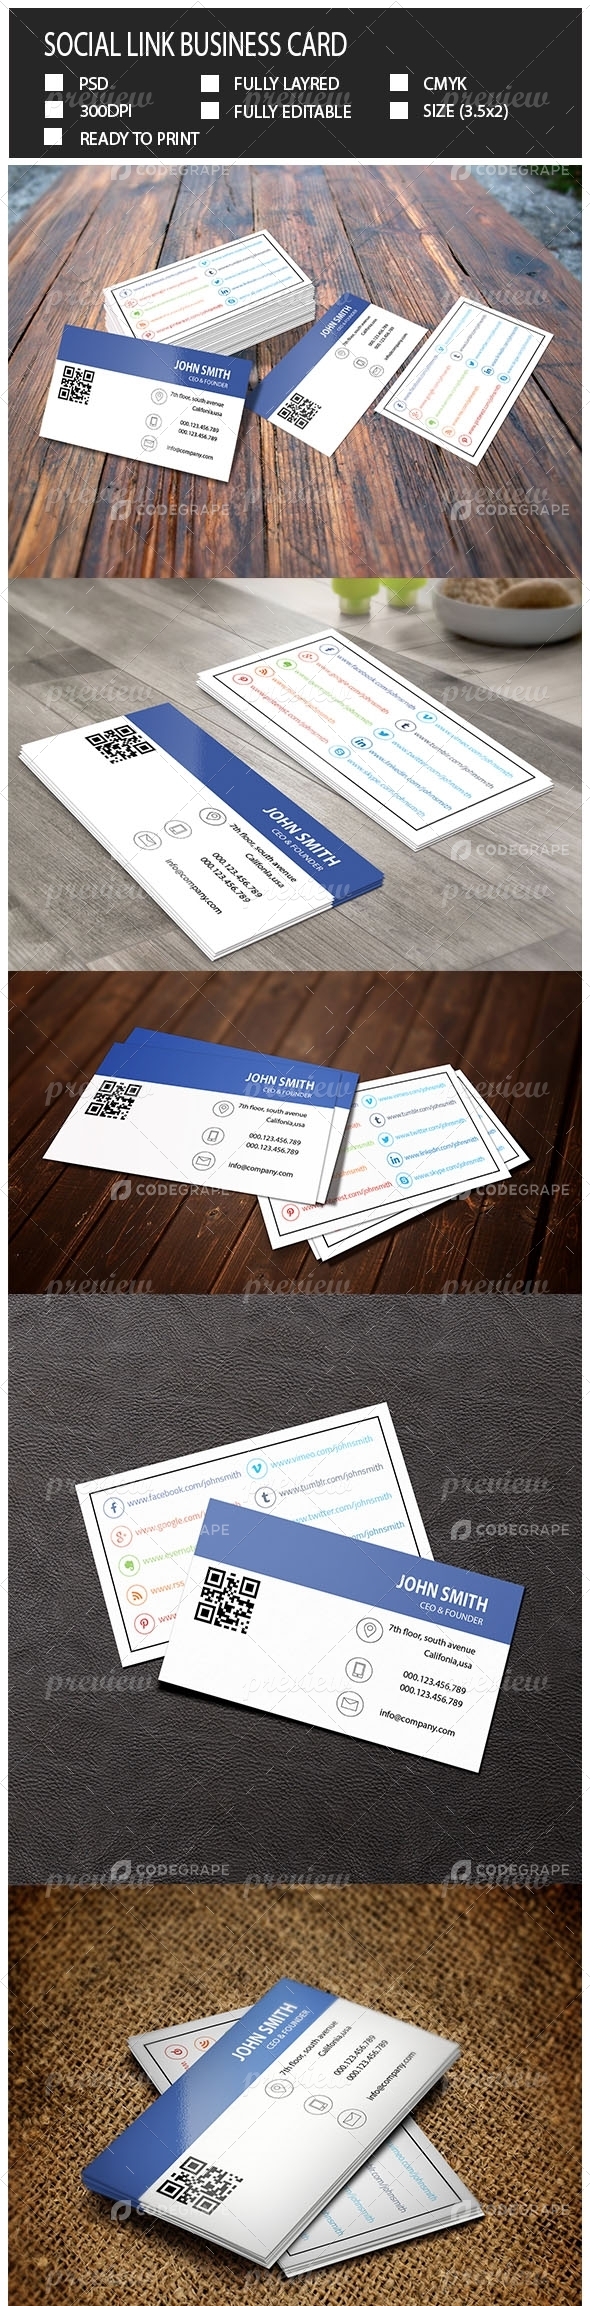 Social Link Business Card